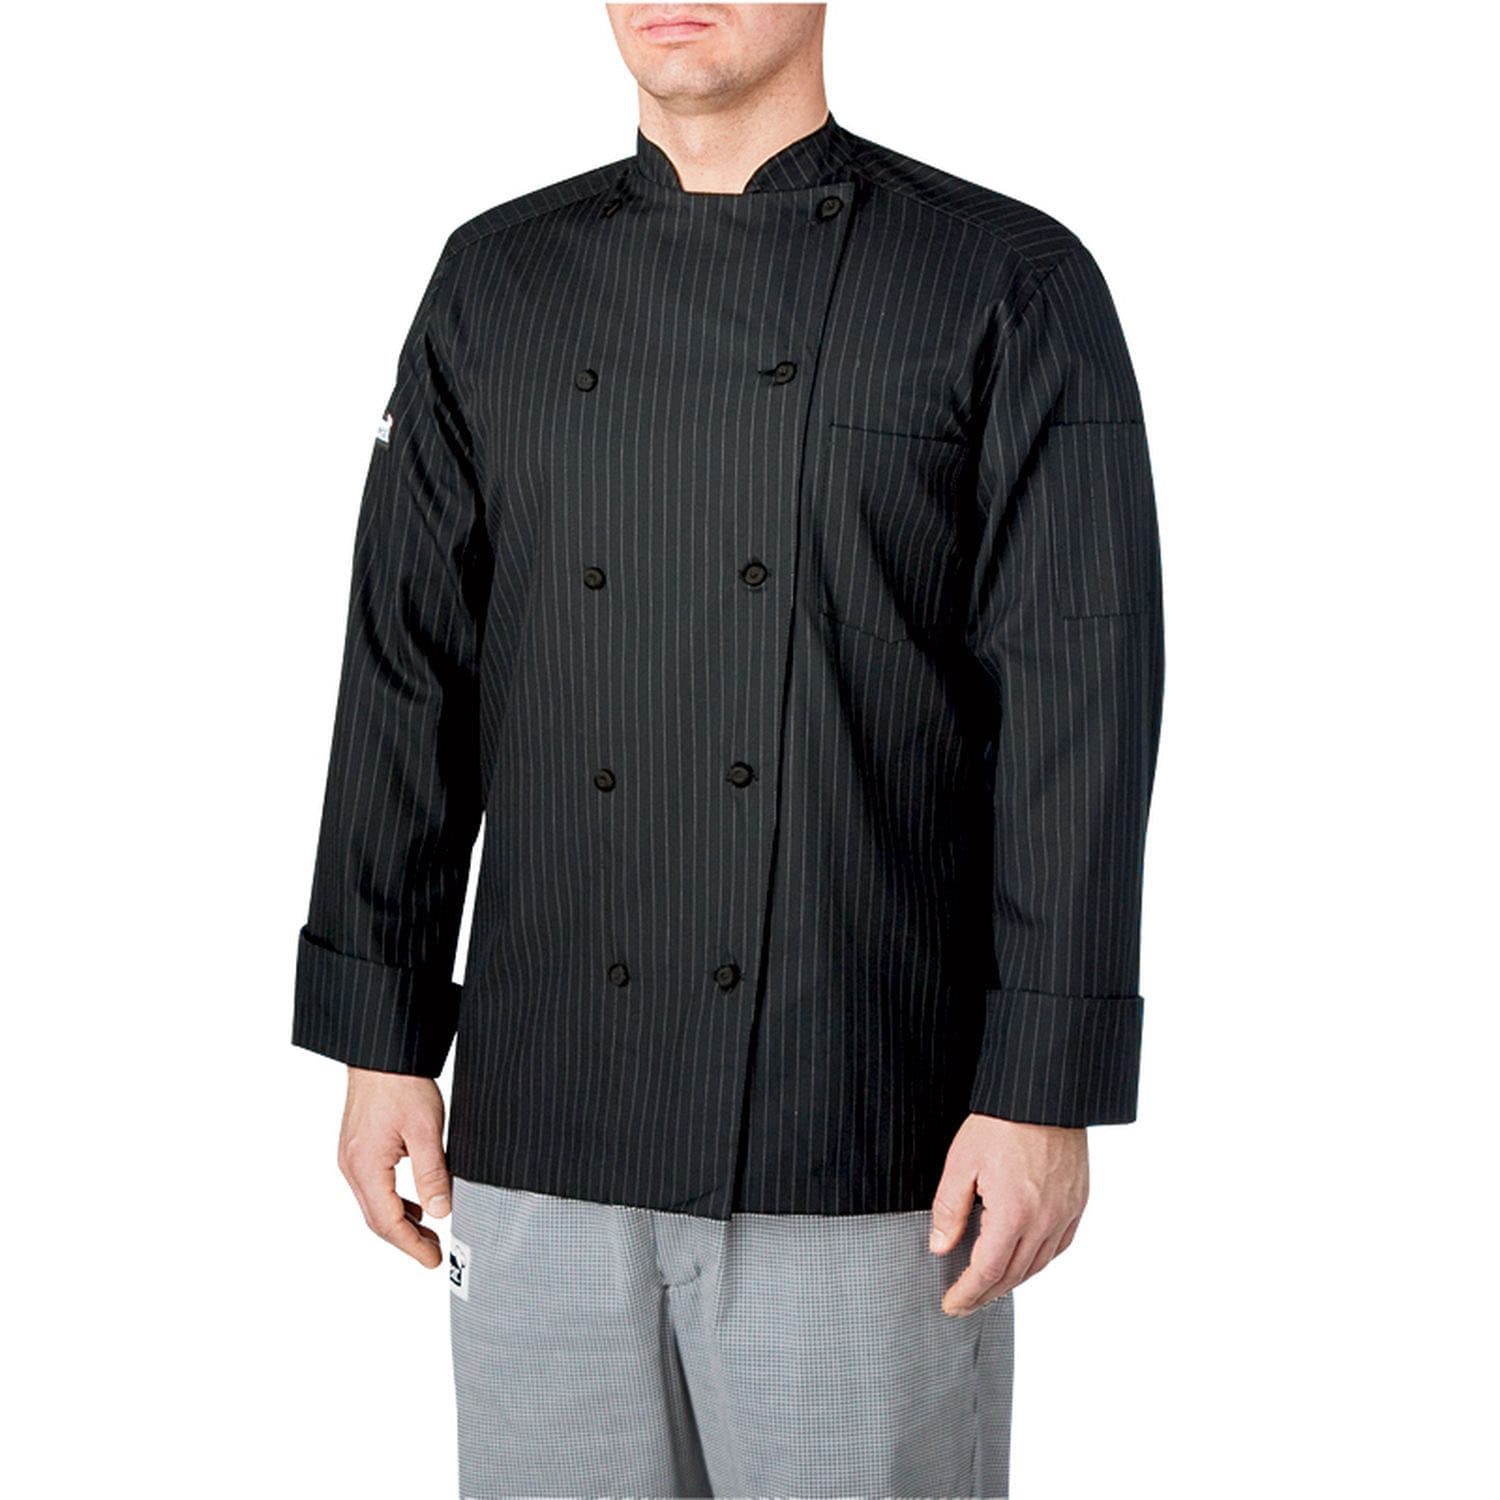 Chefwear 5000-50-XL Black / Gray Pinstripe Chef Jacket